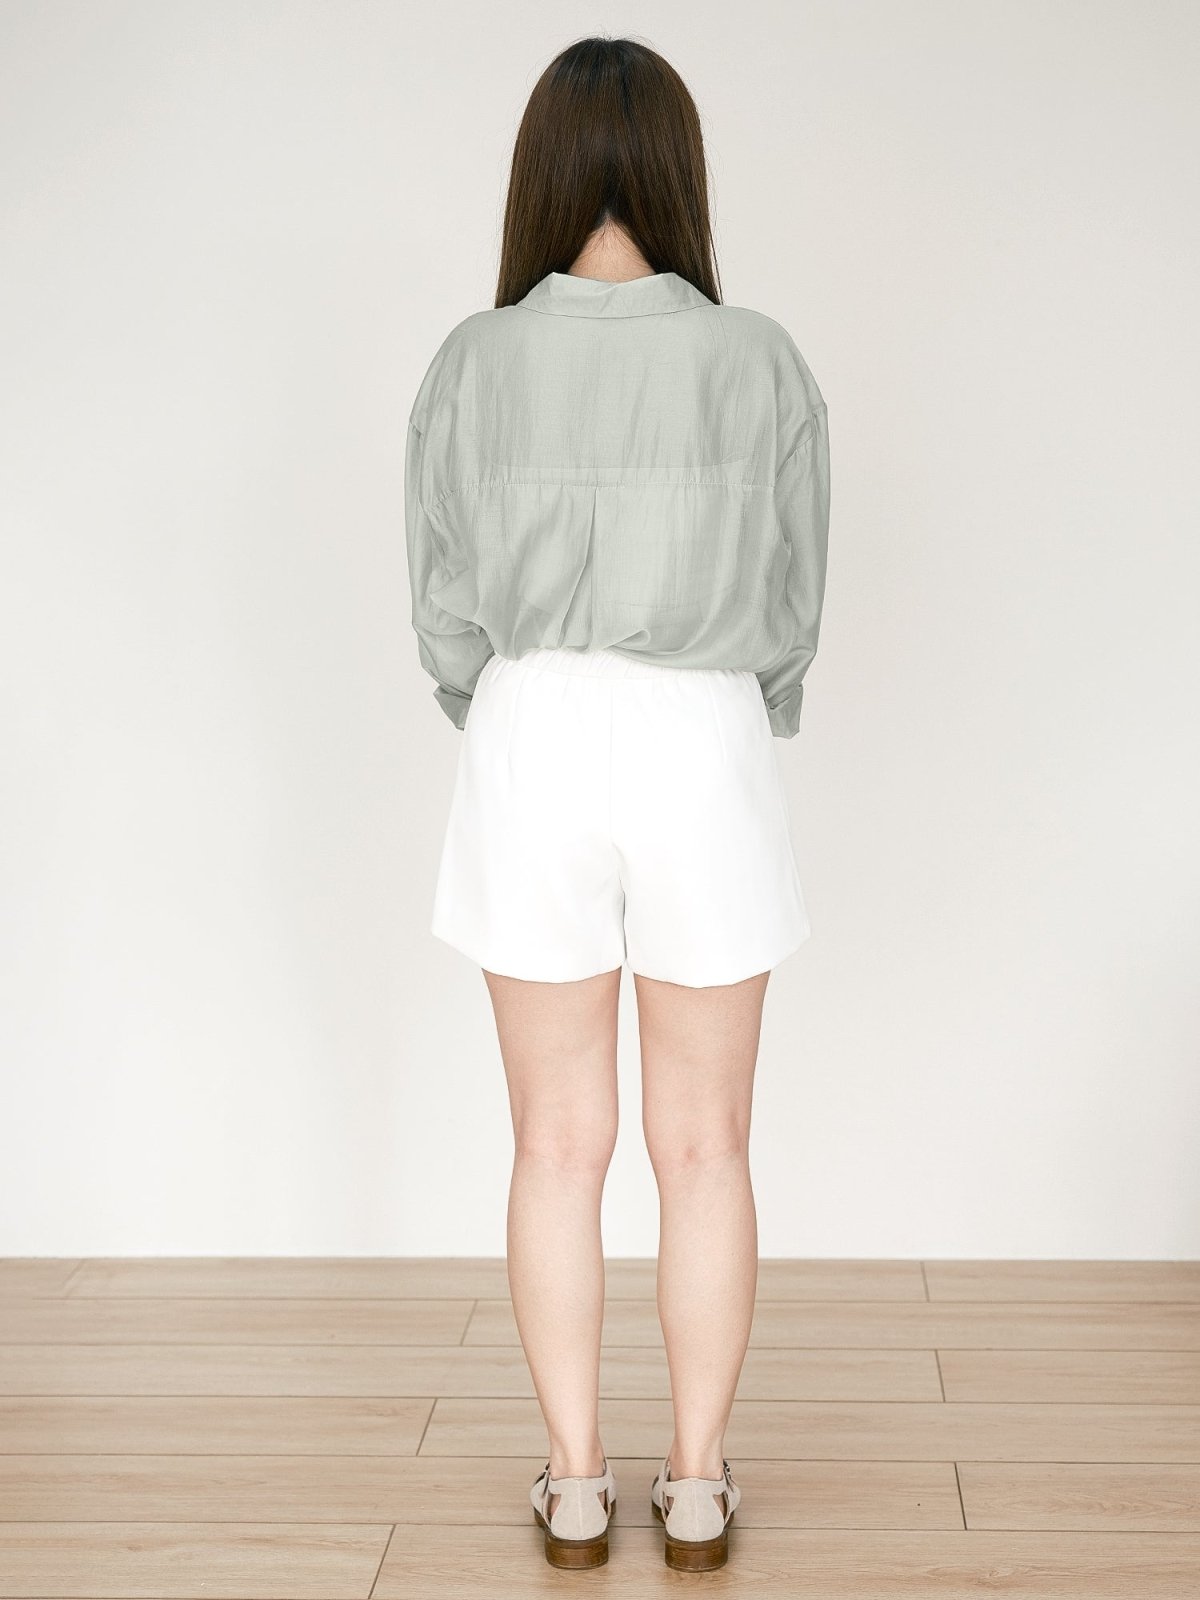 Sienna Semi-Transparent Oversized Shirt - DAG-G-220149MintF - Mint - F - D'ZAGE Designs